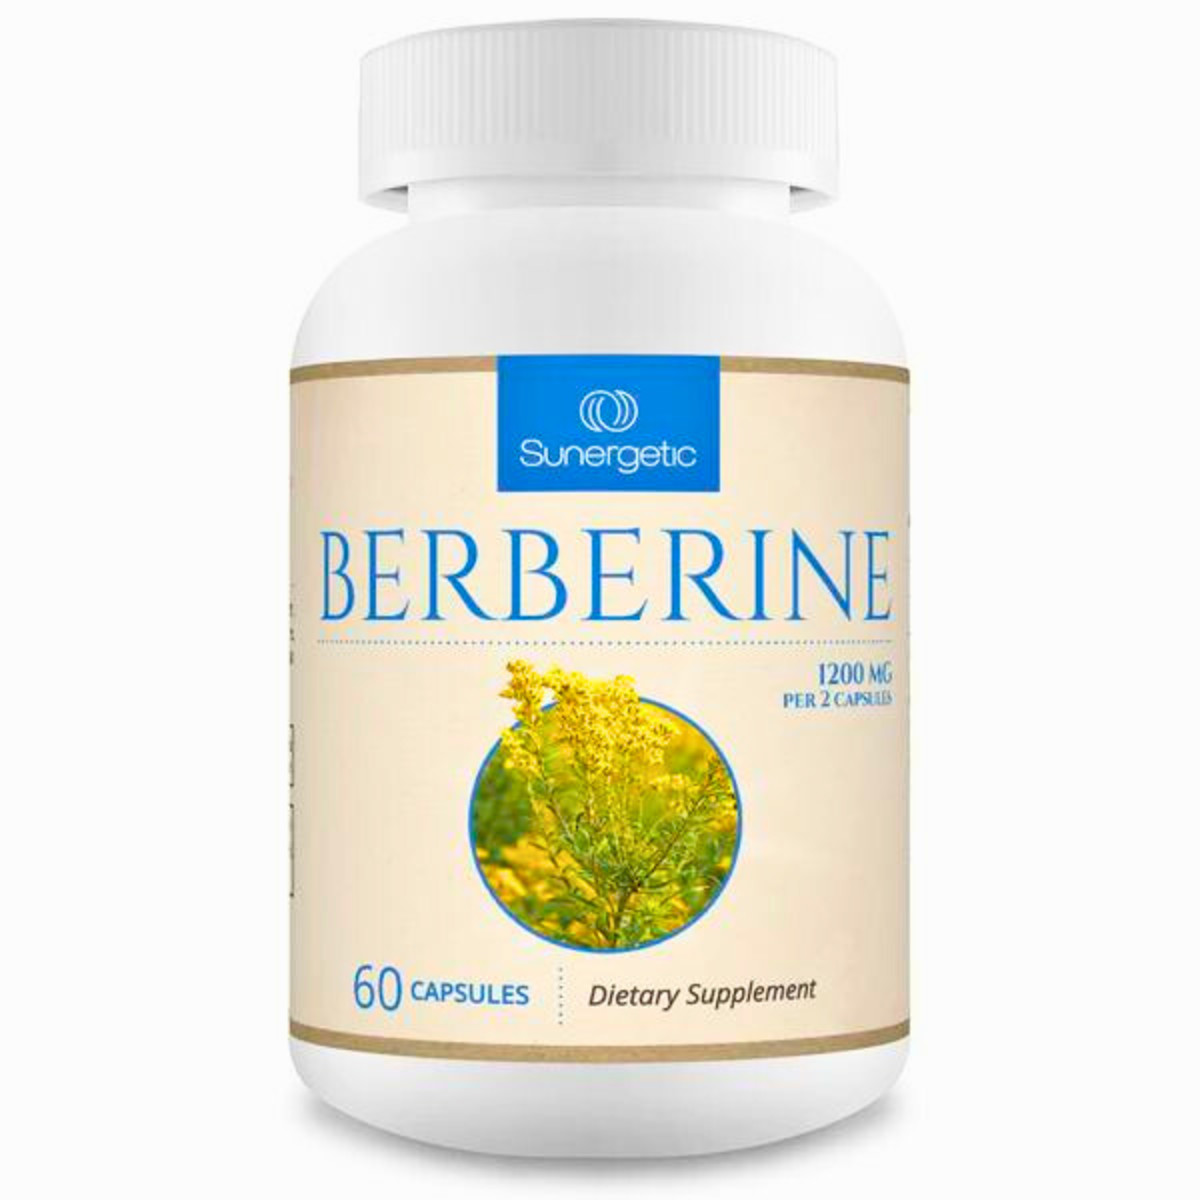 A bottle of Sunergetic Berberine supplements